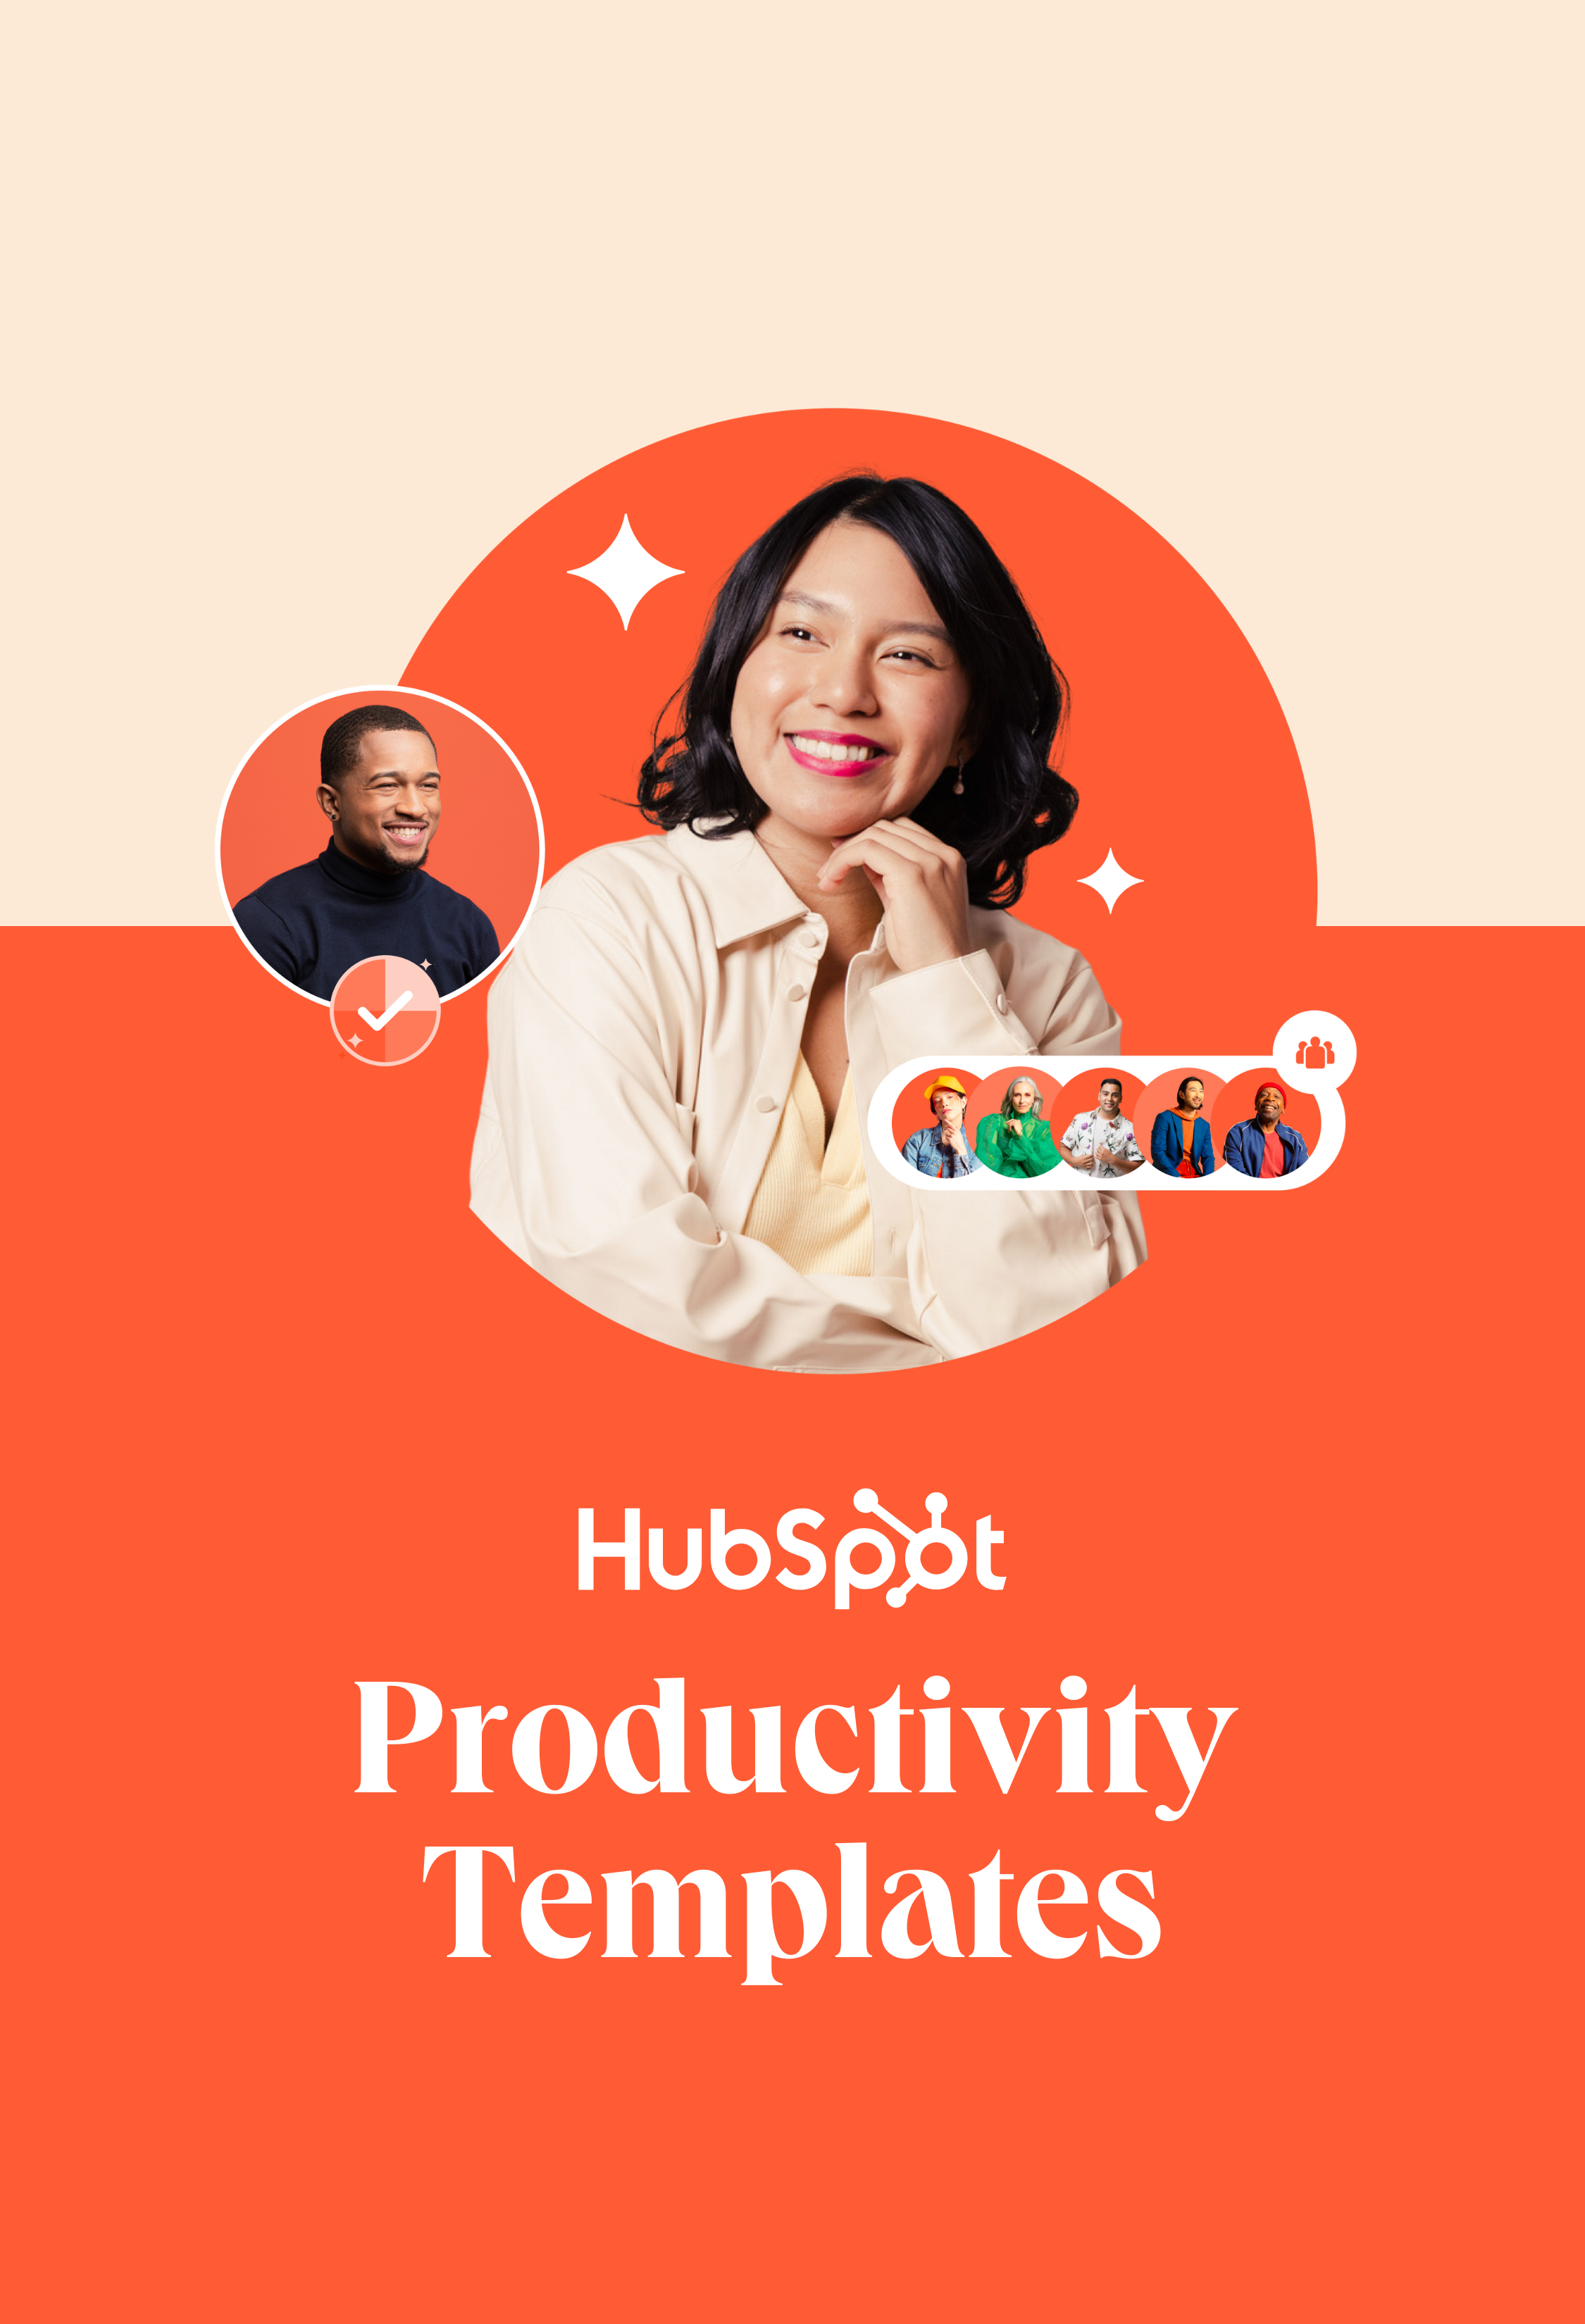 carousel 2 - productivity templates